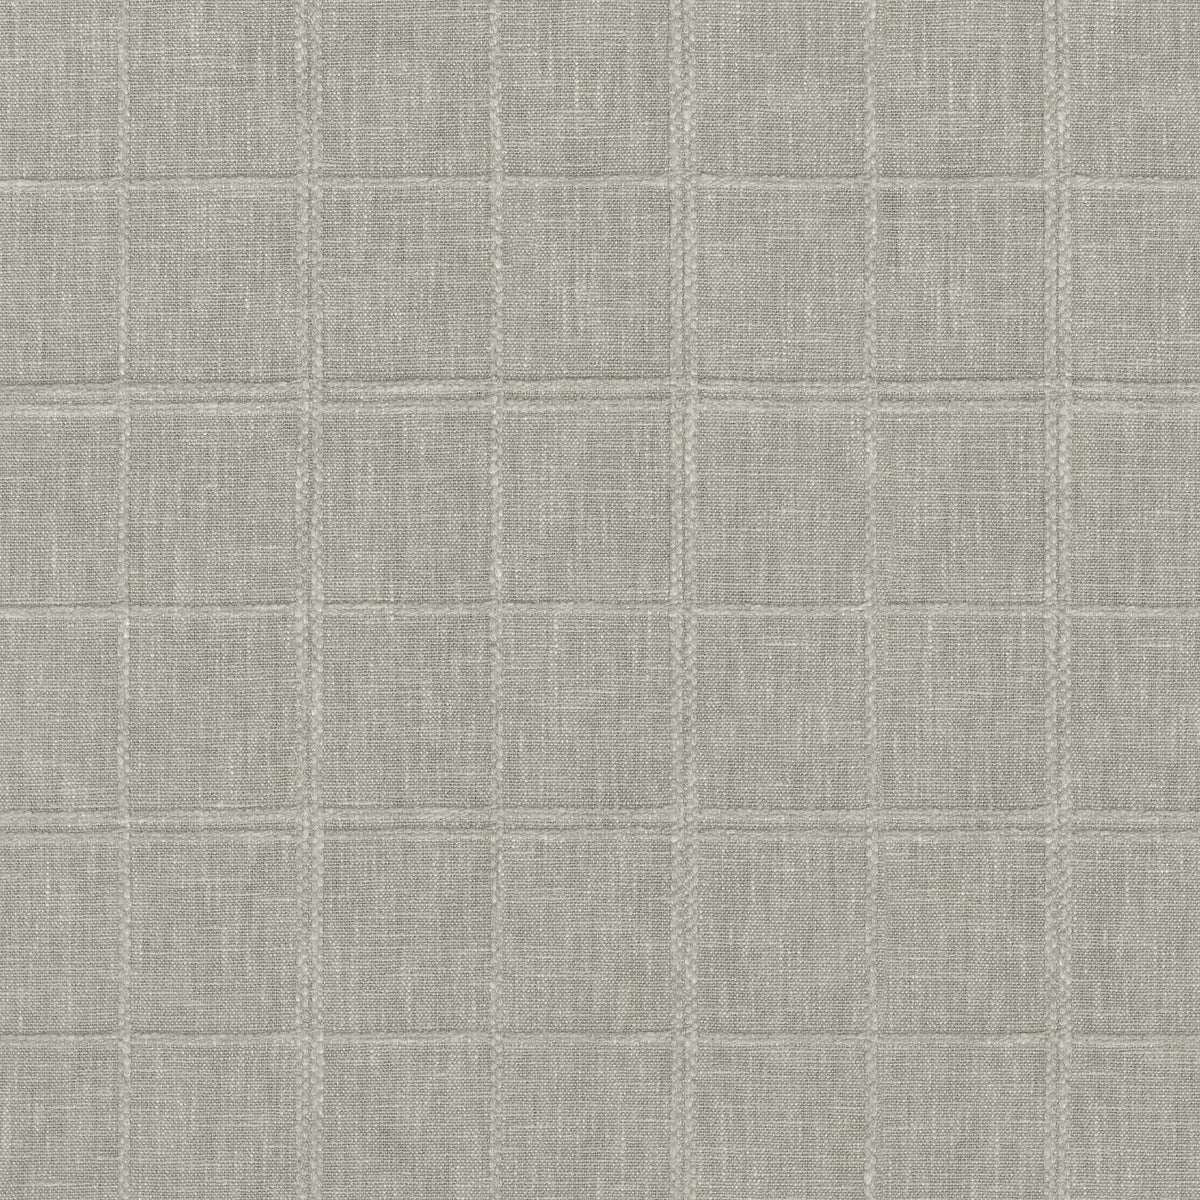 P/K Lifestyles Moray - Shale 410650 Fabric Swatch